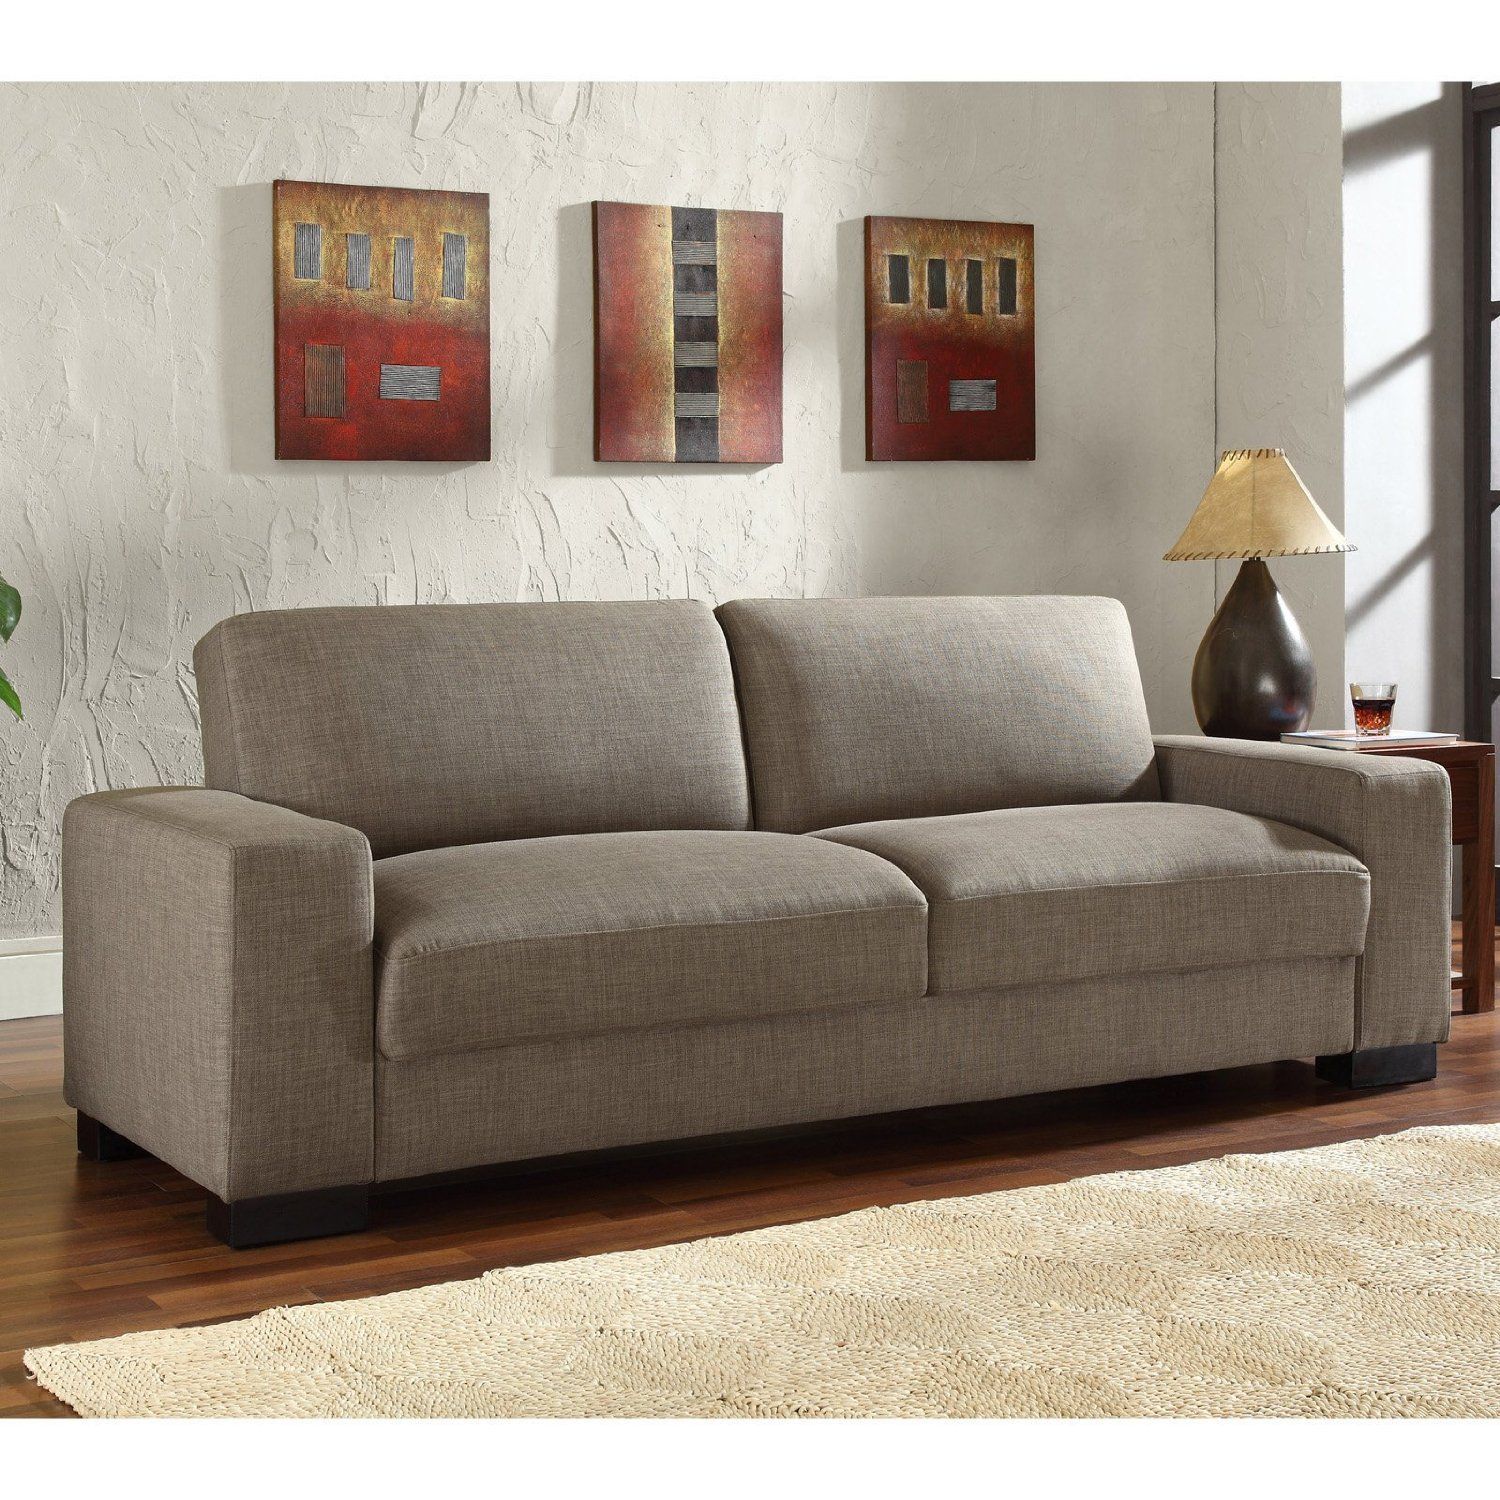 Convertible Sofa: Modern Convertible Sofa In 8 Seat Convertible Sofas (Gallery 20 of 20)